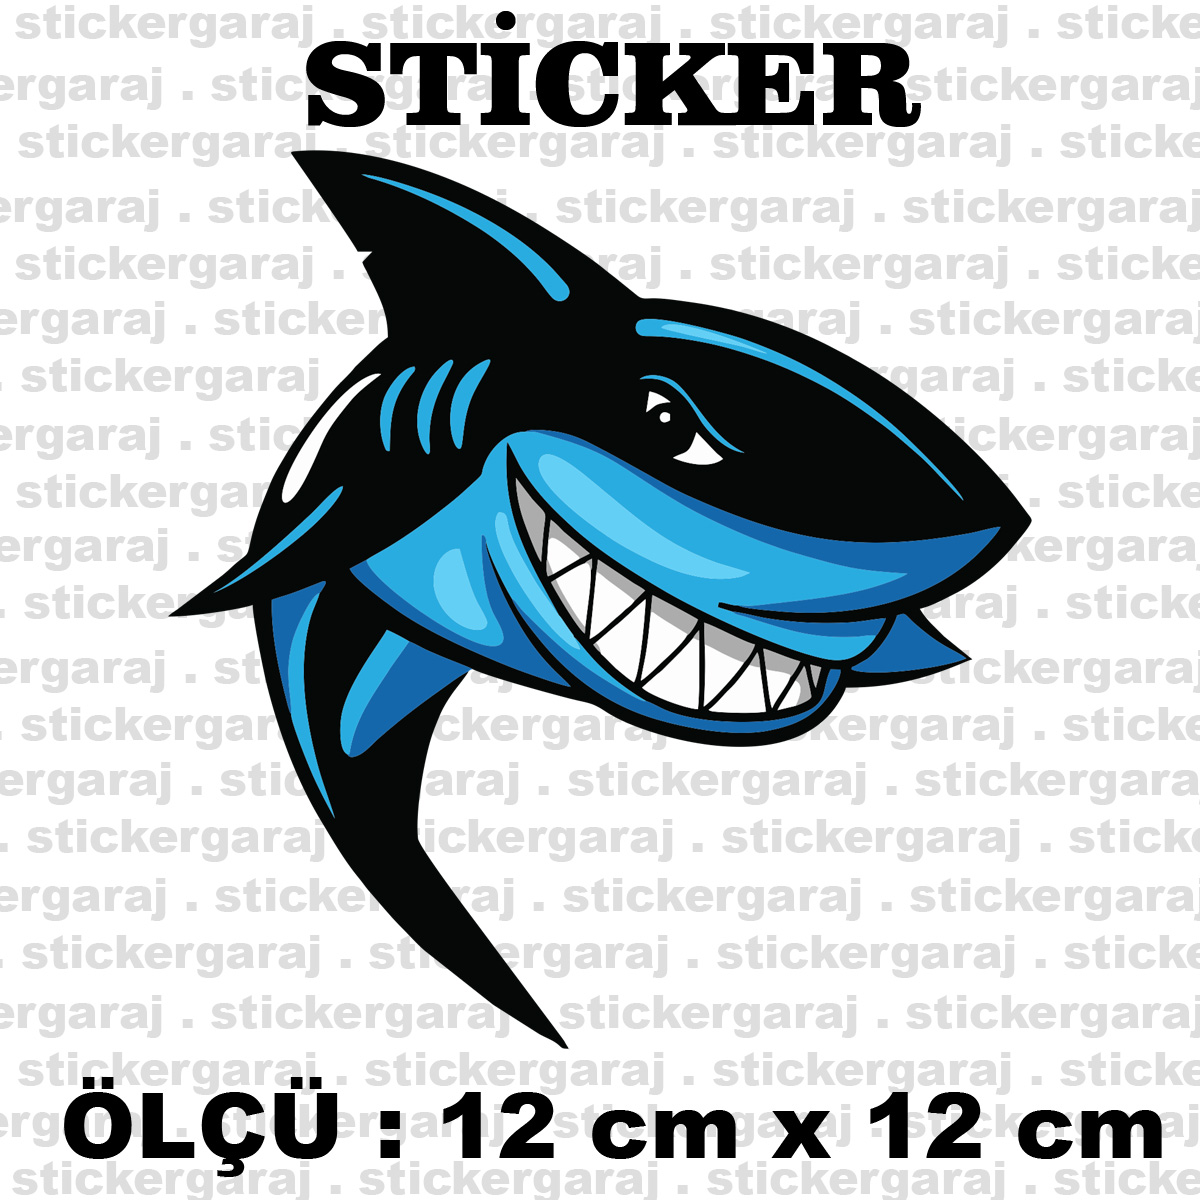 jaws5.cdr 12 12cm - Jaws köpek balığı sticker